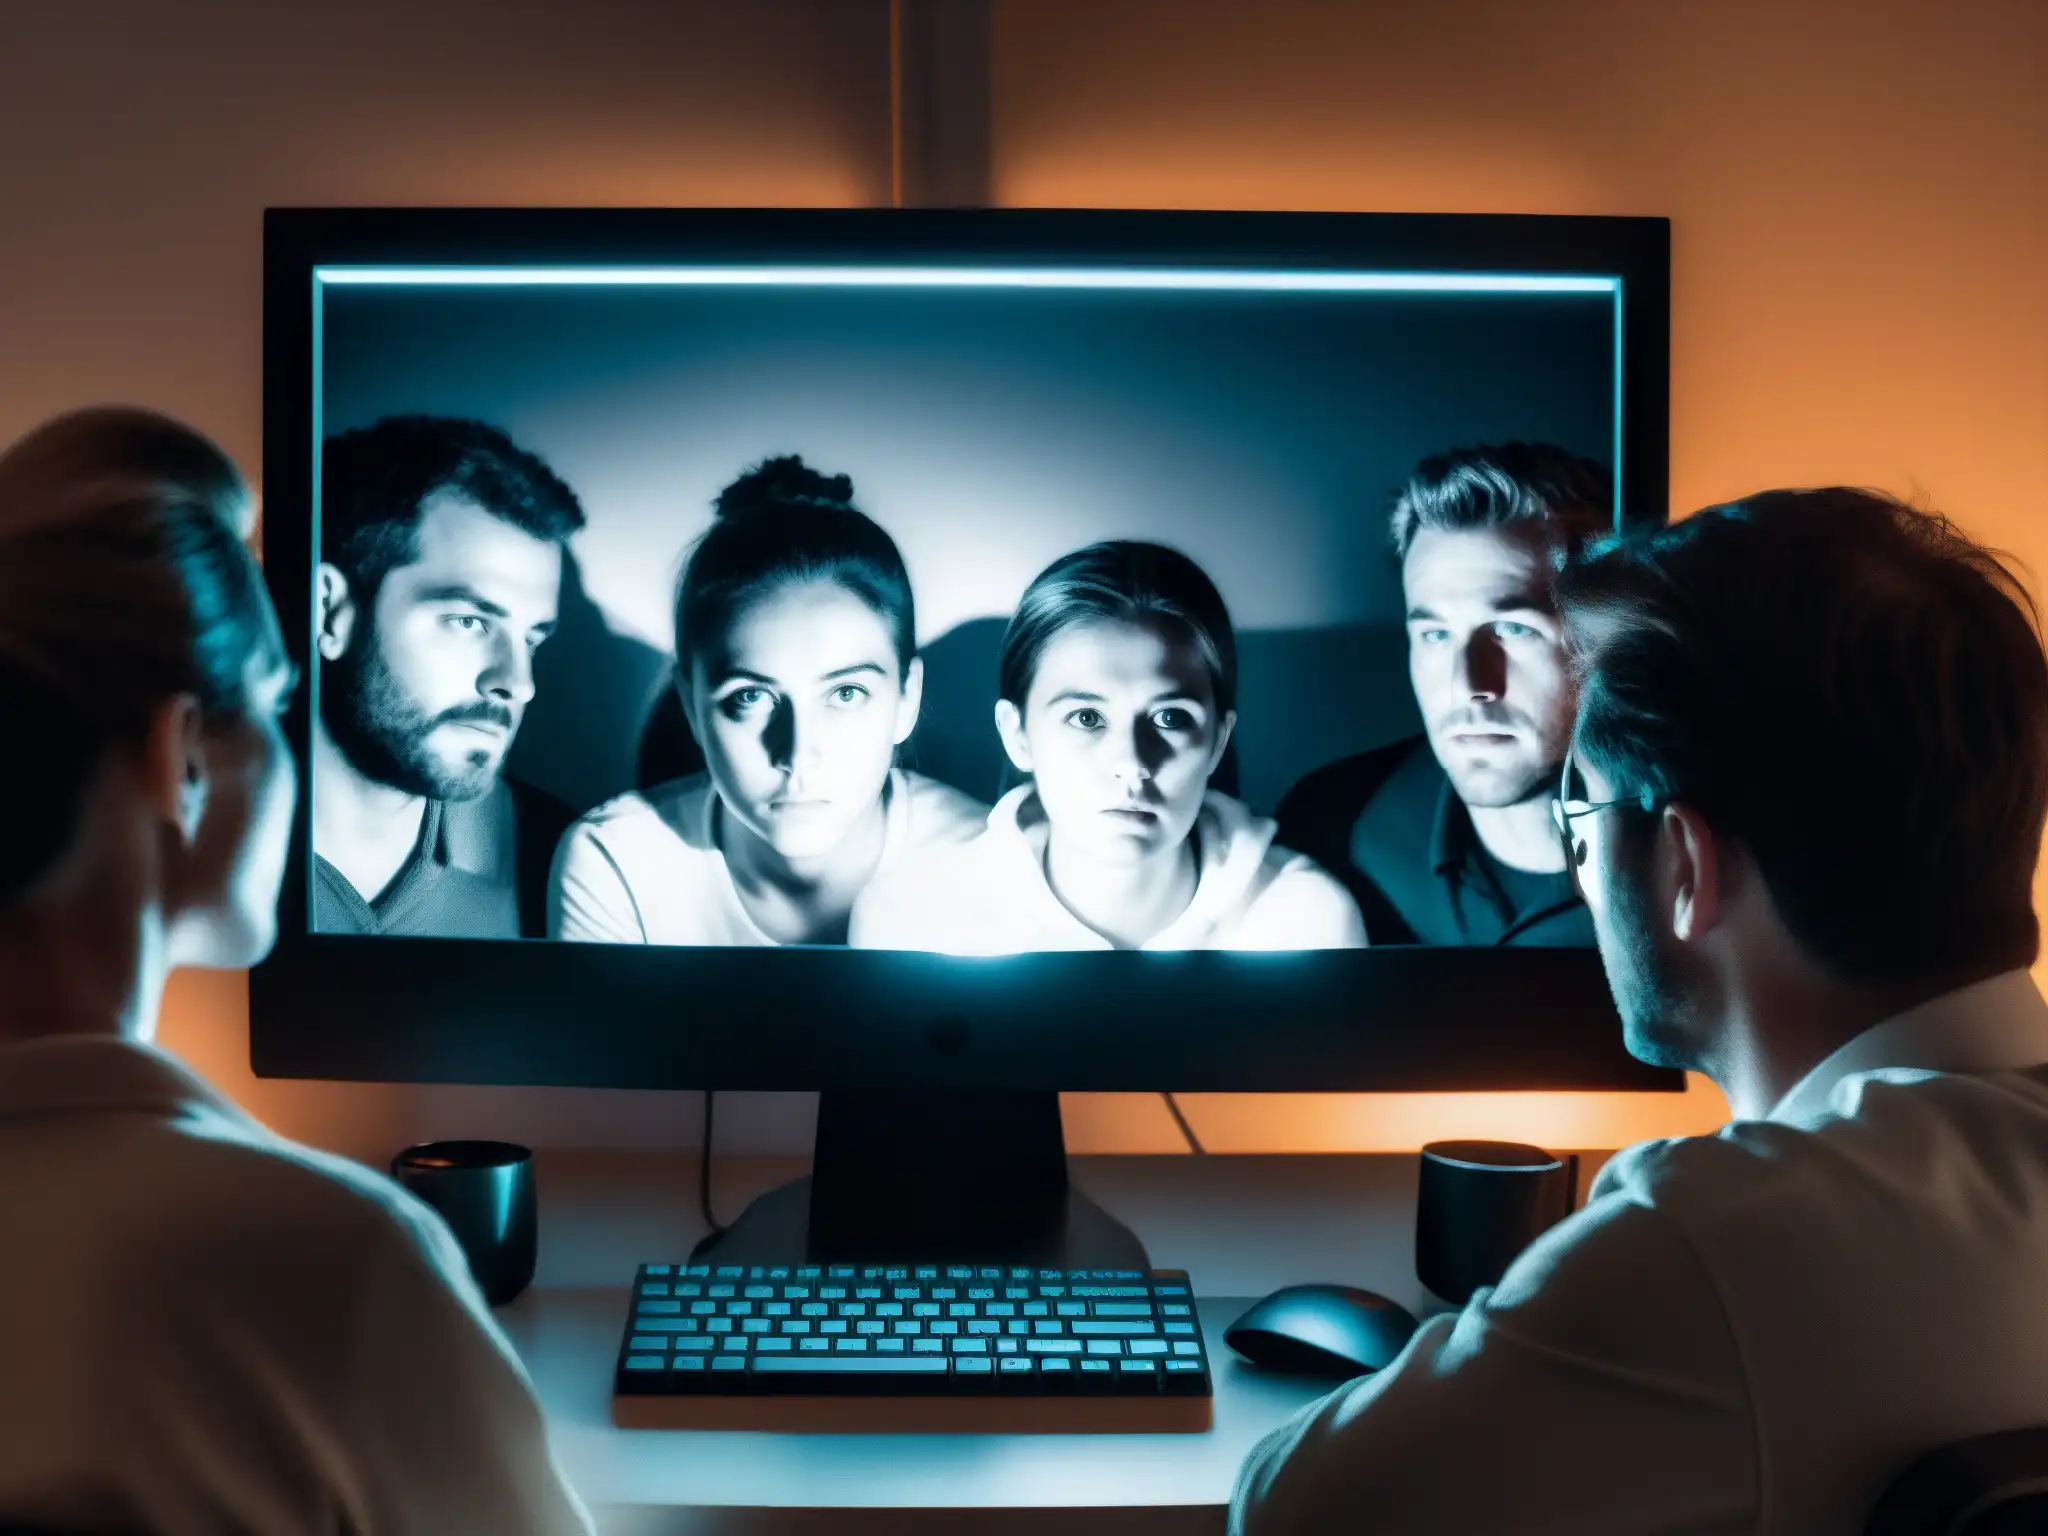 Grupo tenso de personas mirando pantalla con rostros iluminados, reflejando psicosis colectiva efecto Slenderman